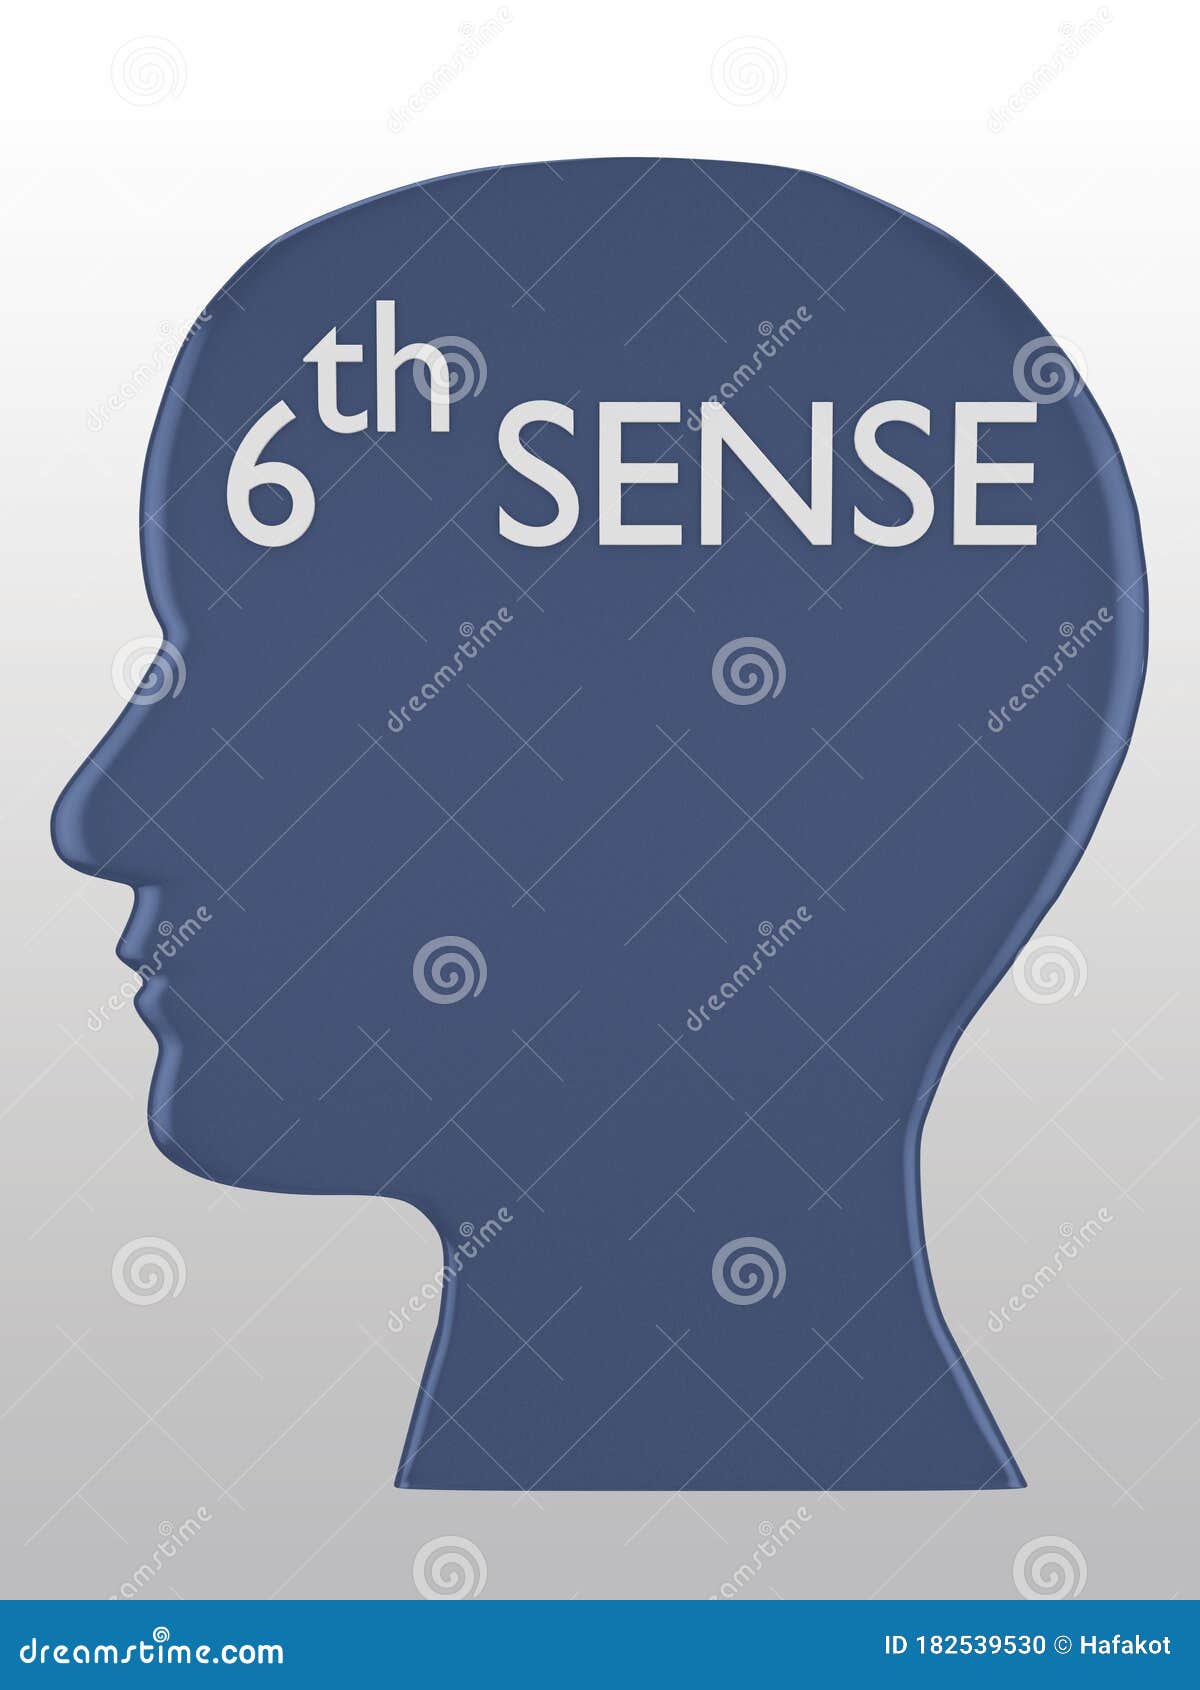 Sixth Sense concept stock illustration. Illustration of hands - 182539530